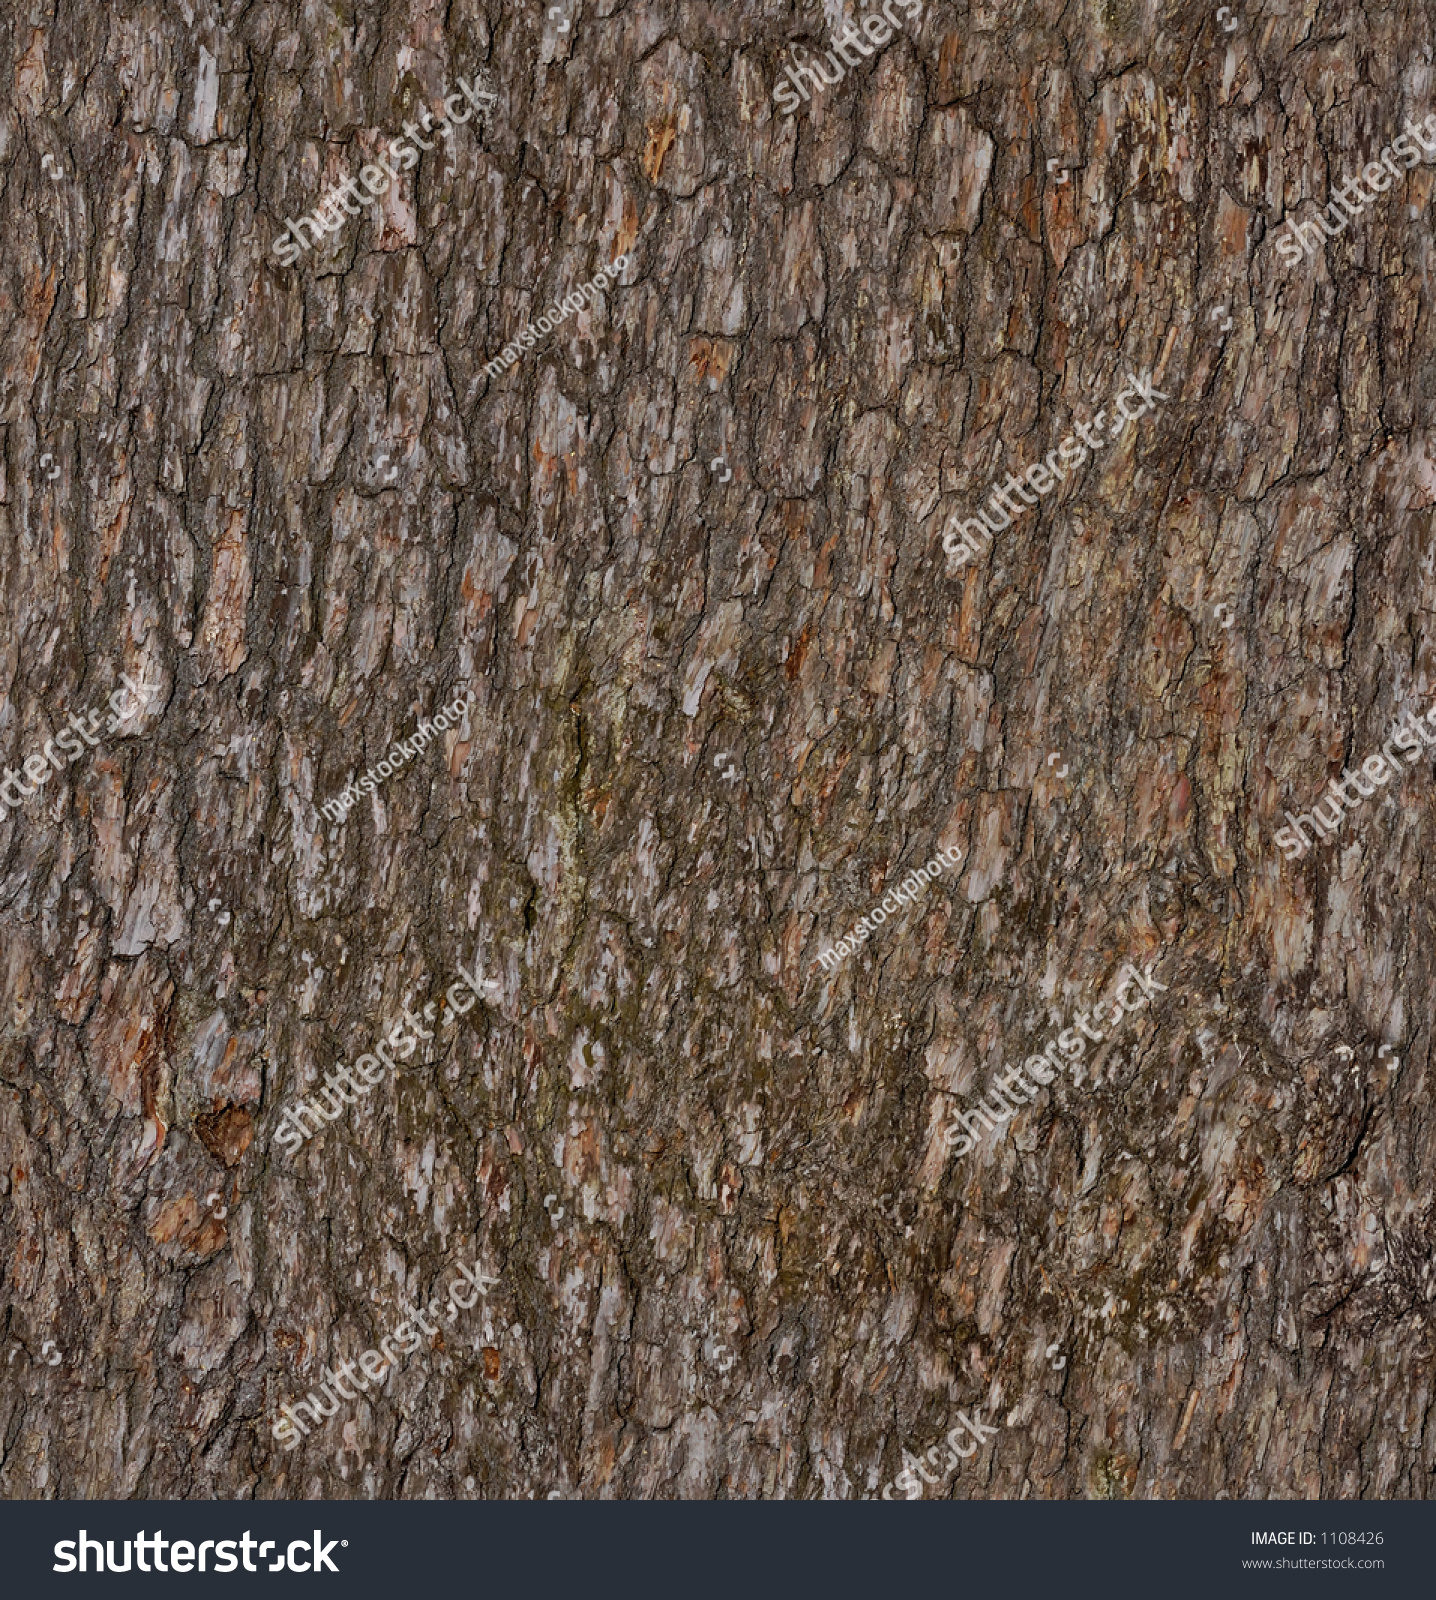 Pinetree Bark Texture Background Stock Photo 1108426 - Shutterstock